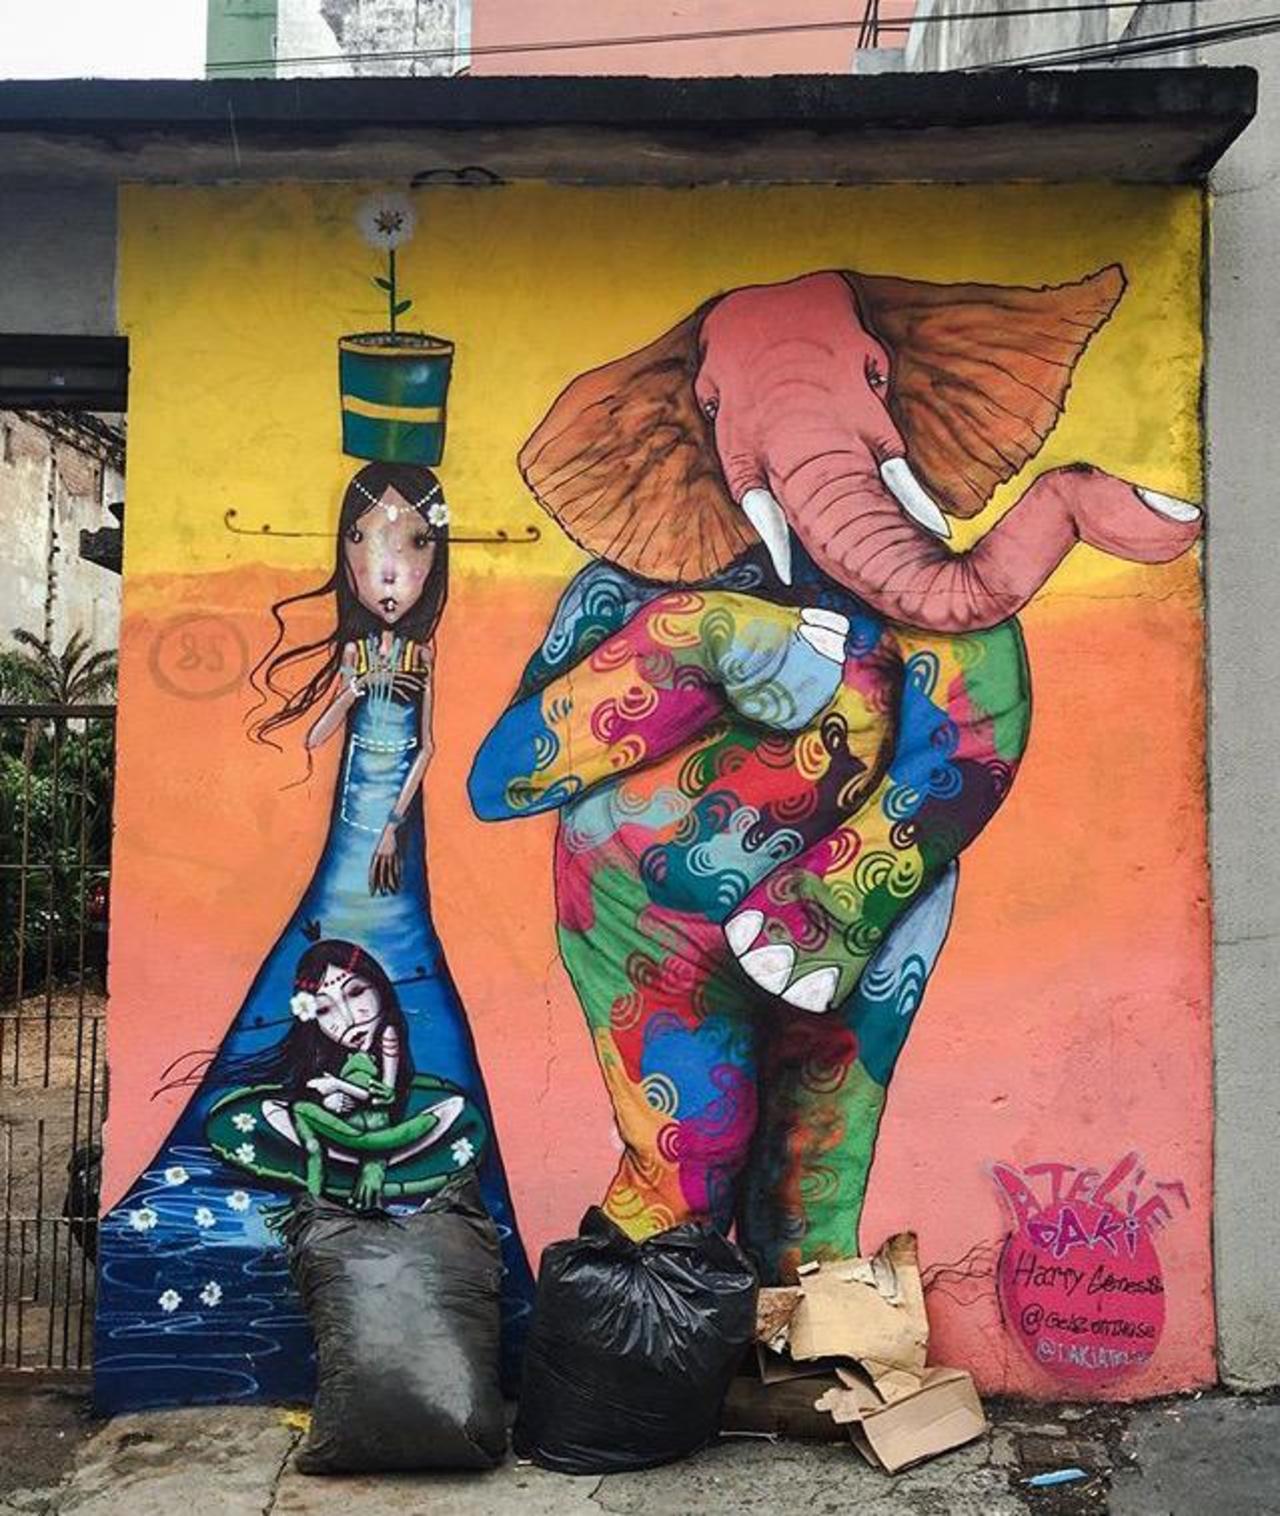 RT @GoogleStreetArt: Street Art by Harry Geneis & Gelson in São Paulo 

#art #mural #graffiti #streetart http://t.co/8PEpPWOkw0